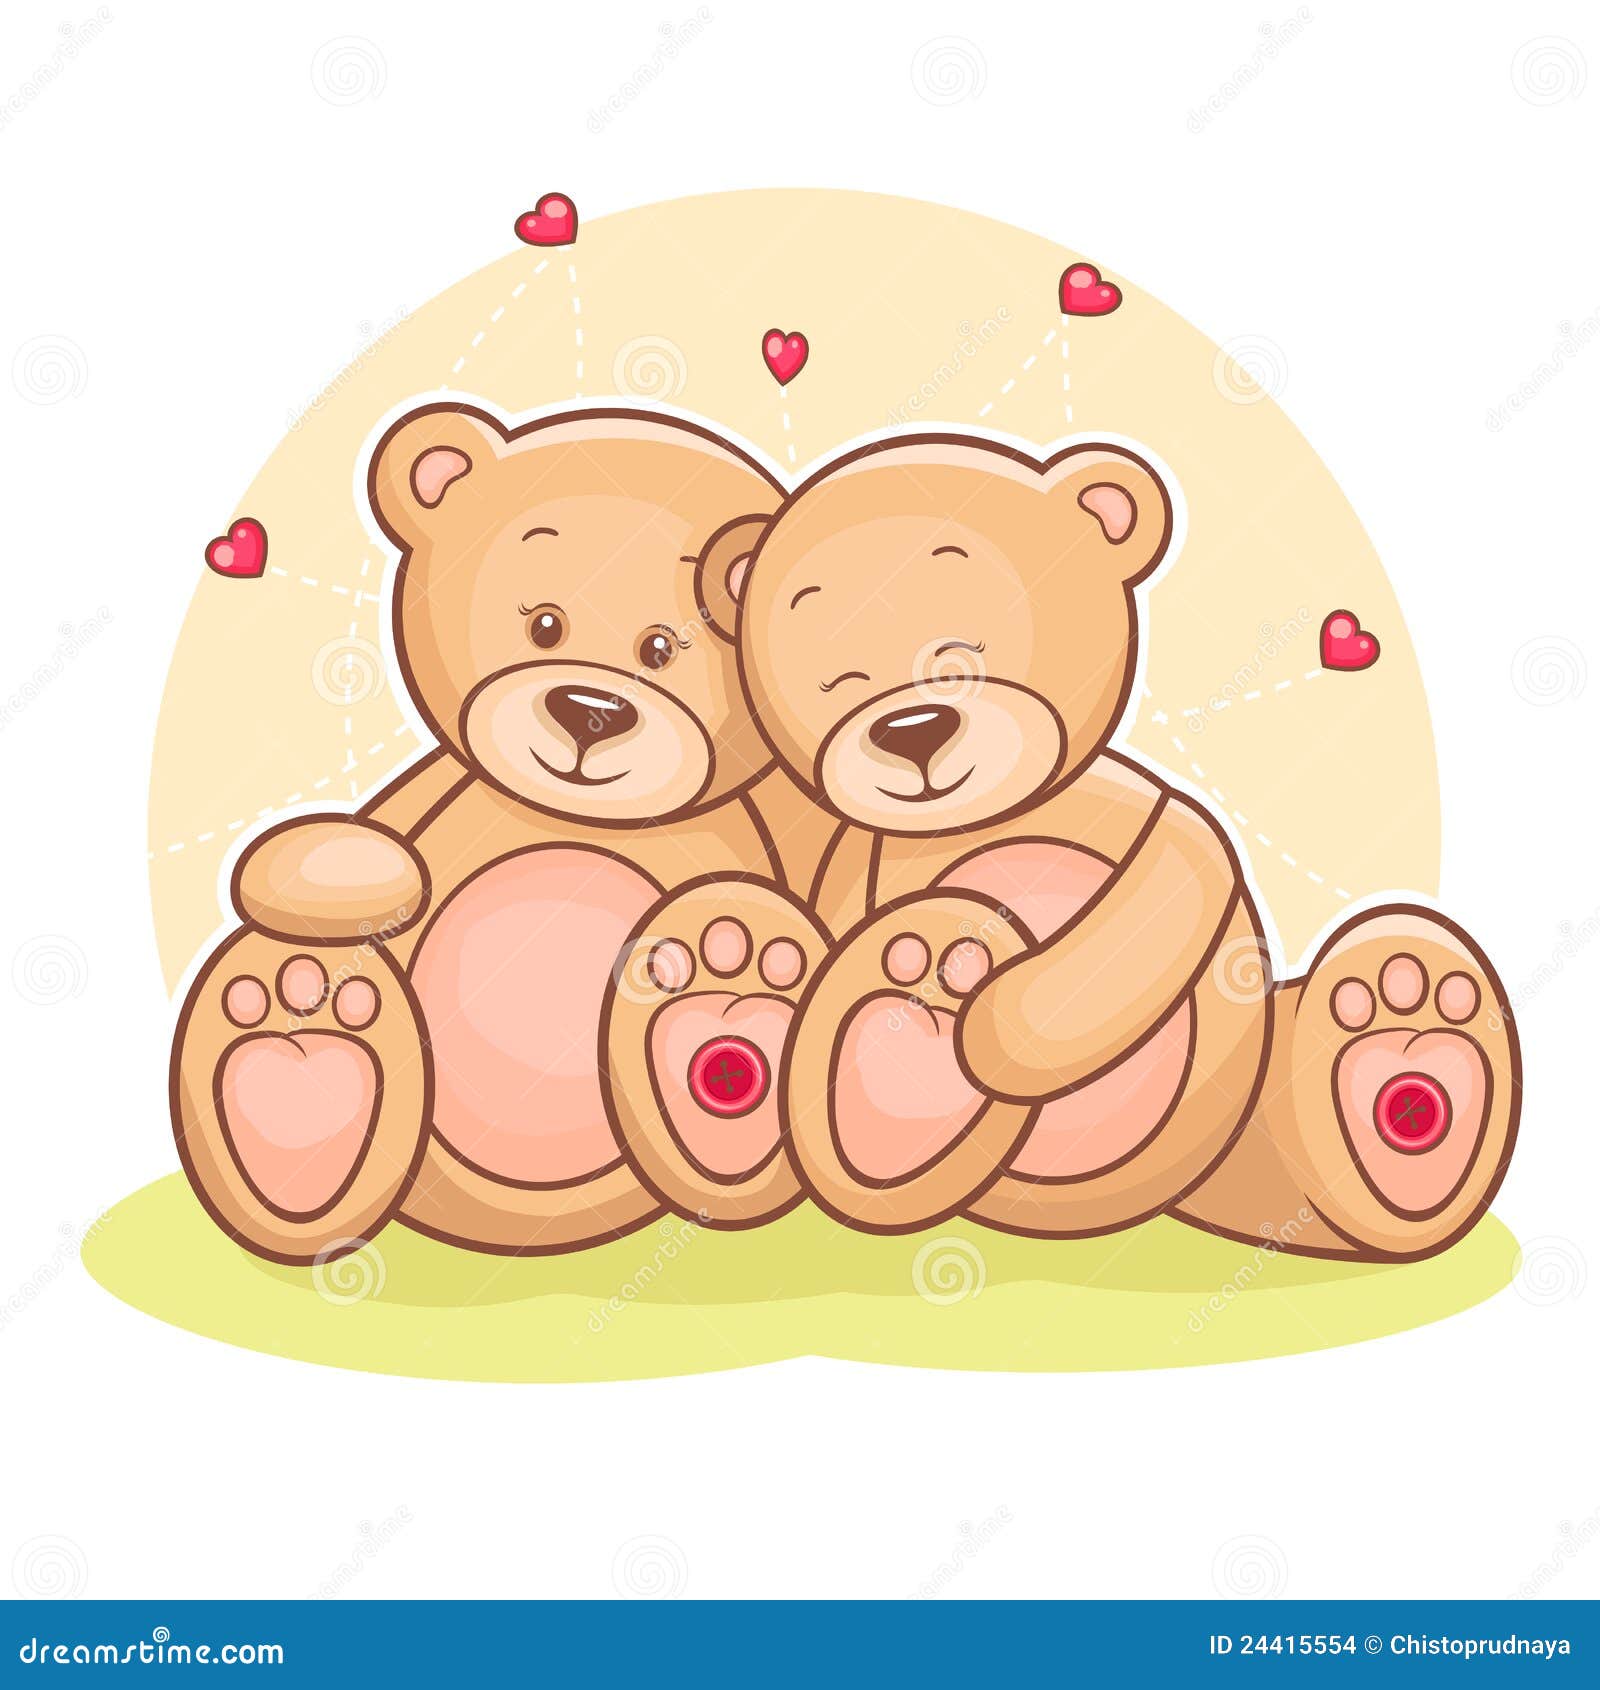 Teddy Bear love stock vector. Illustration of romantic - 24415554